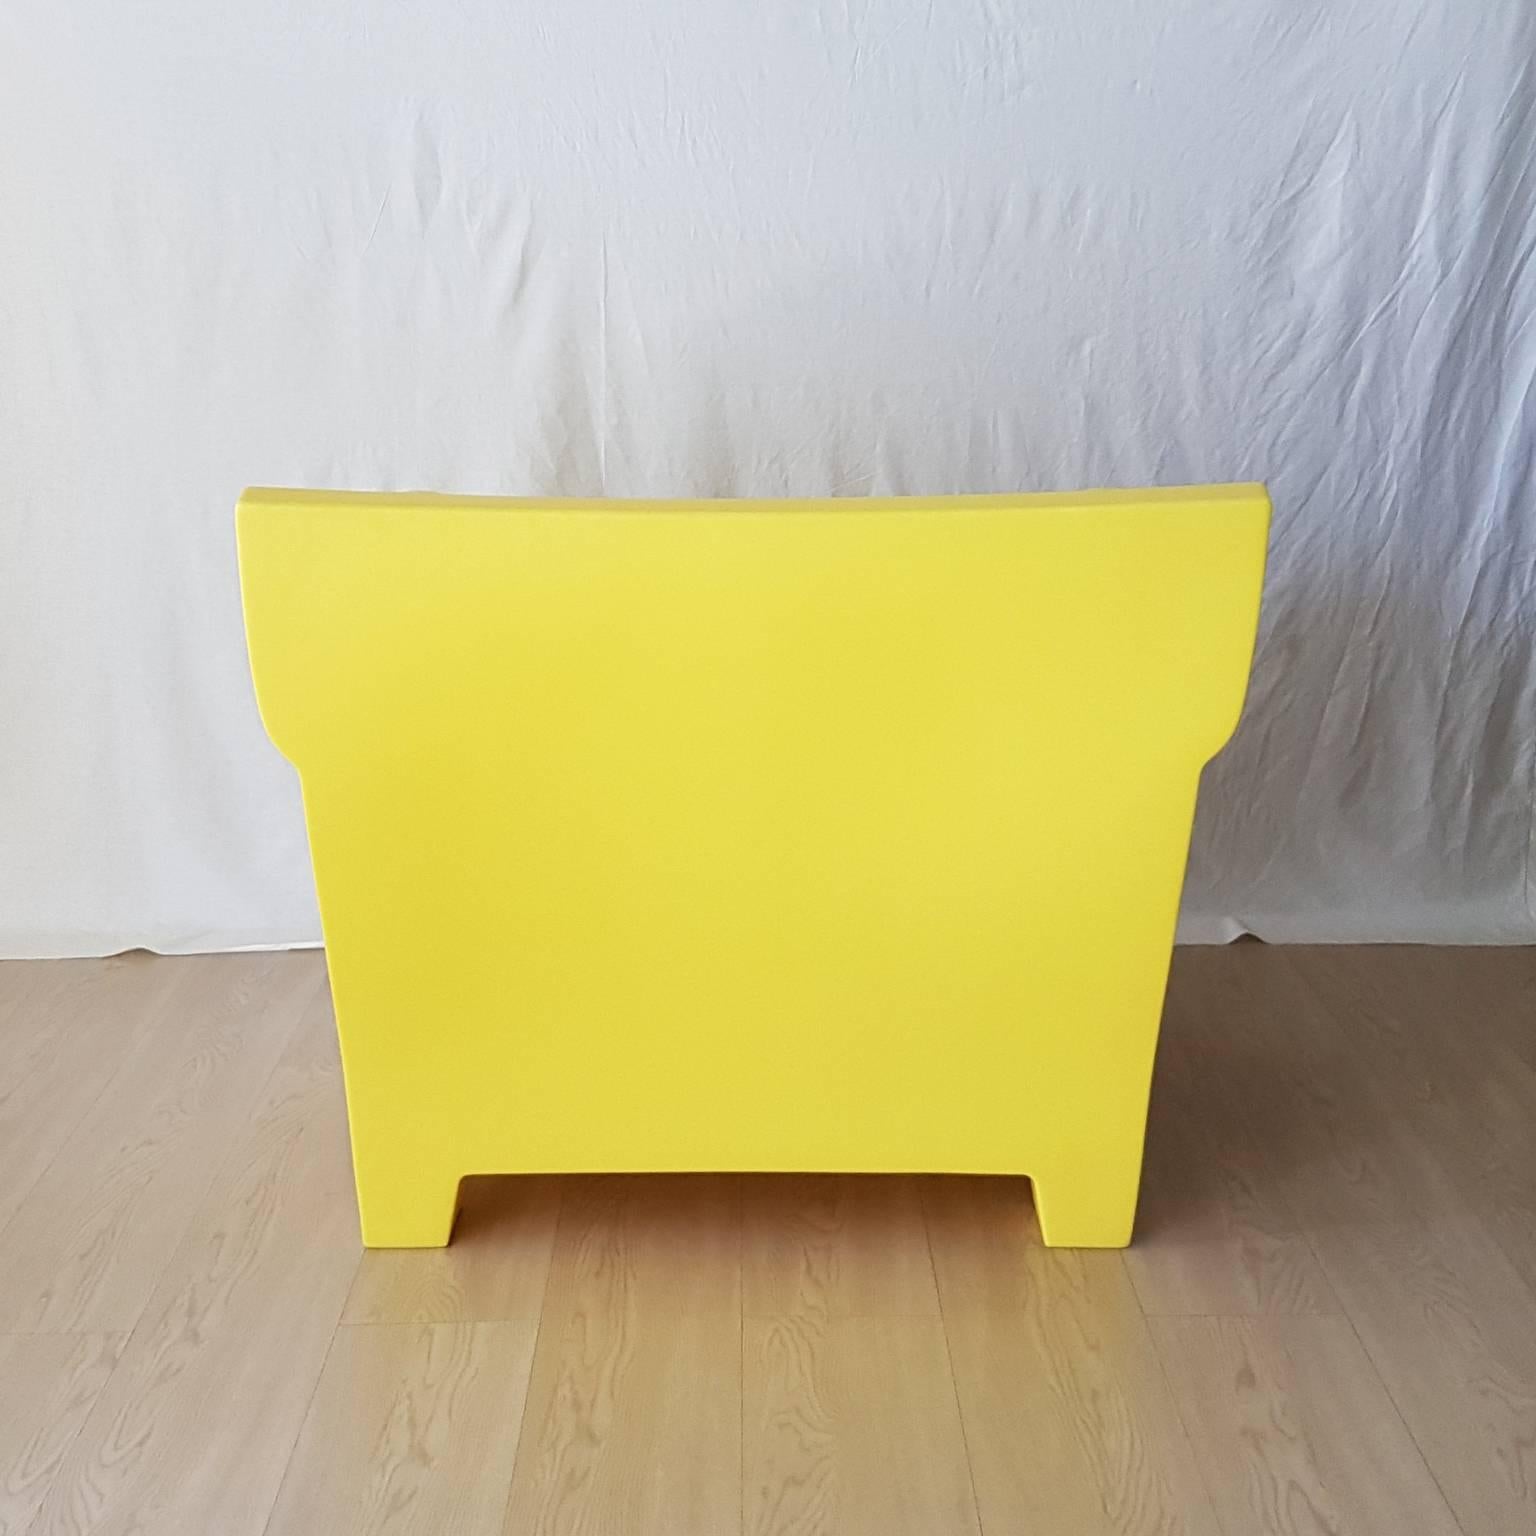 Italian Yellow Outdoor Armchair by Philippe Starck / Kartell Compasso d'oro Award, 2001